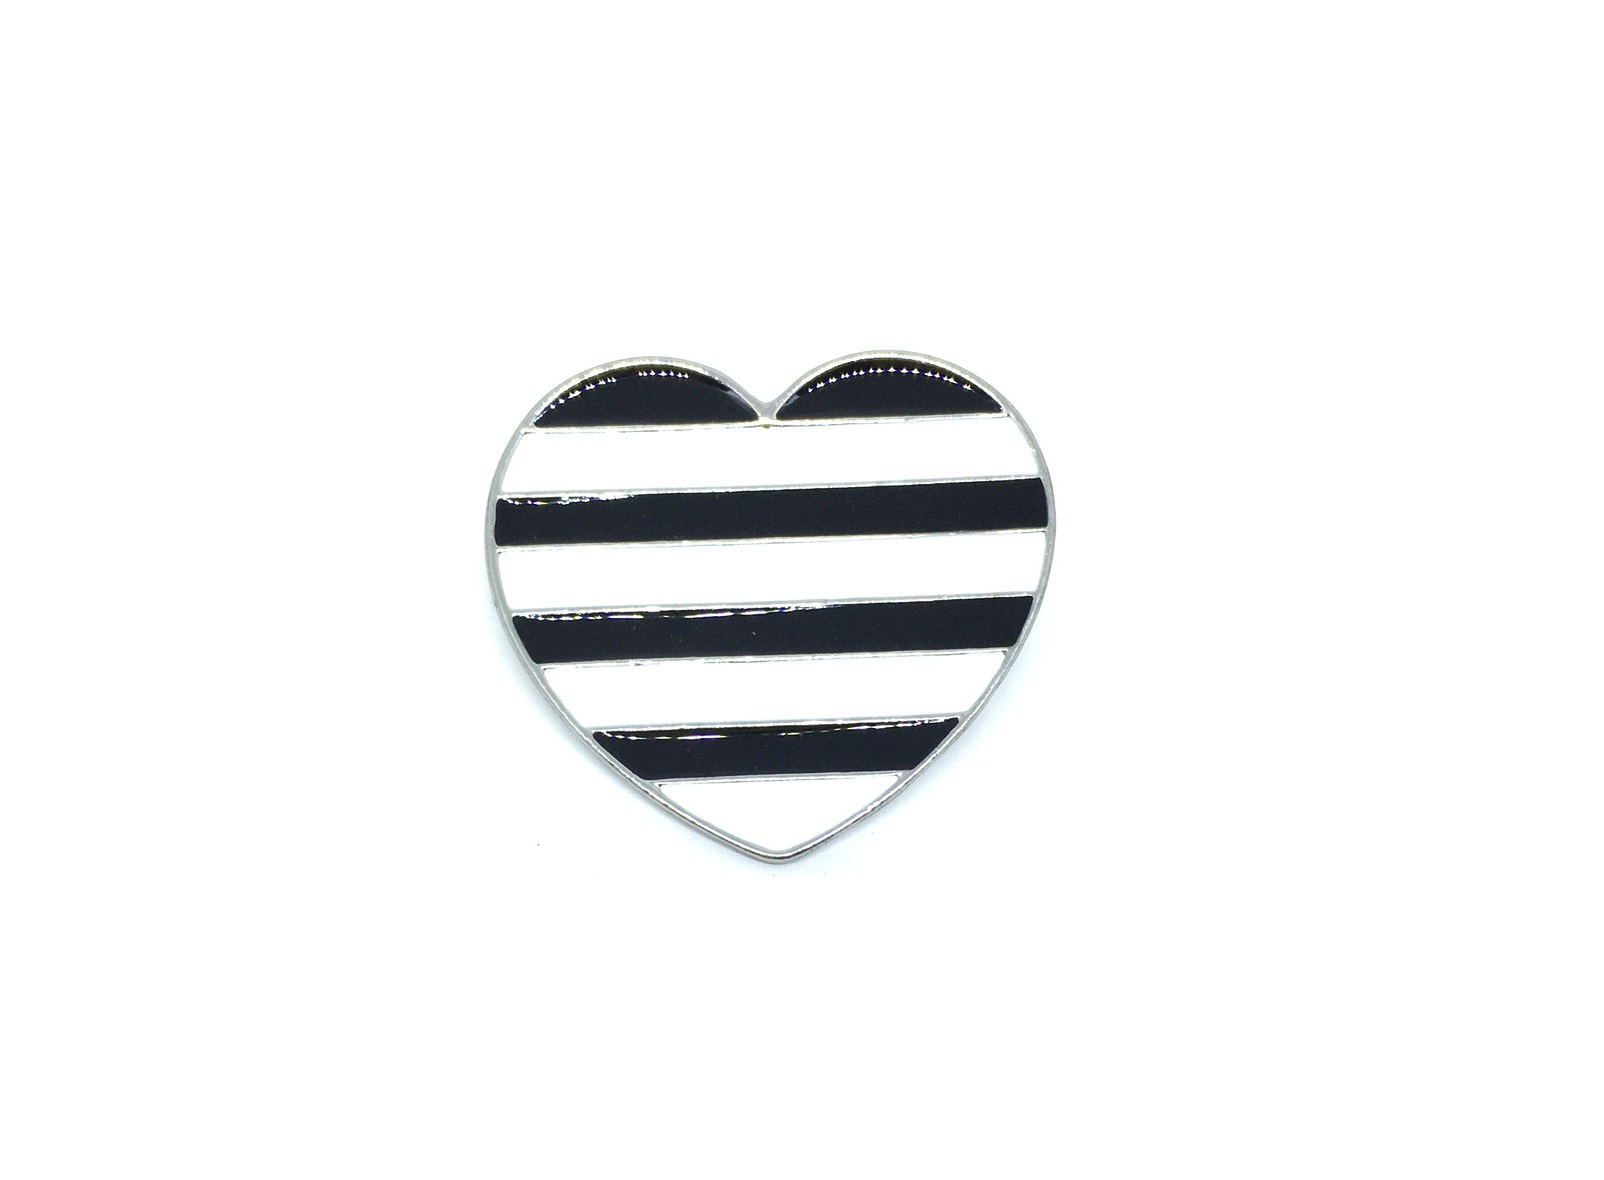 Black Heart Pin